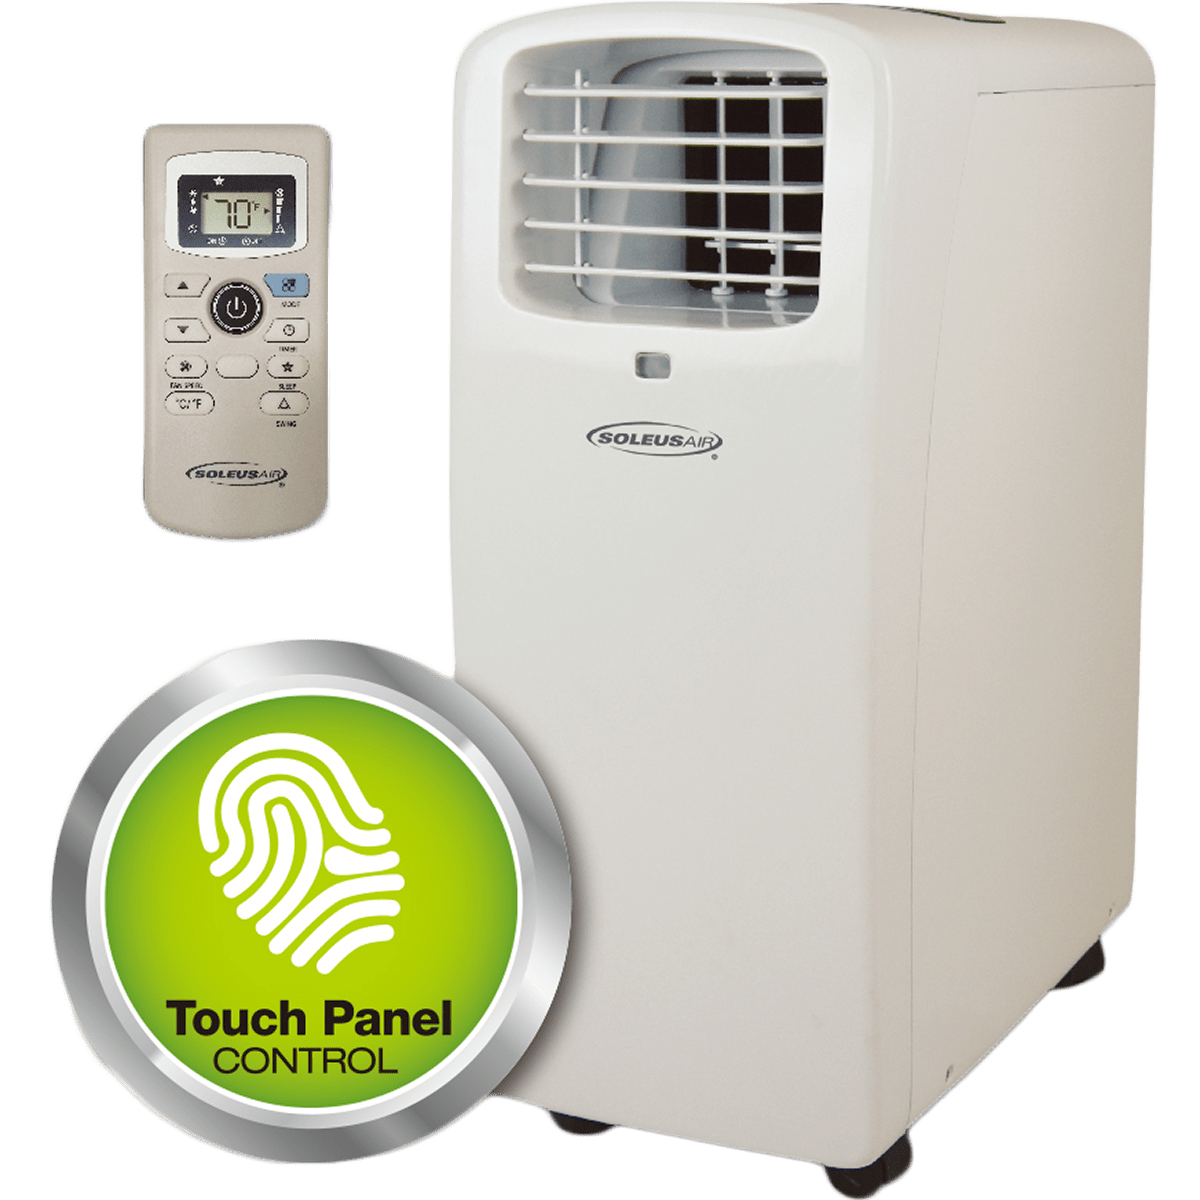 Soleus Air KY120 12,000 BTU Portable Air Conditioner - With Remote